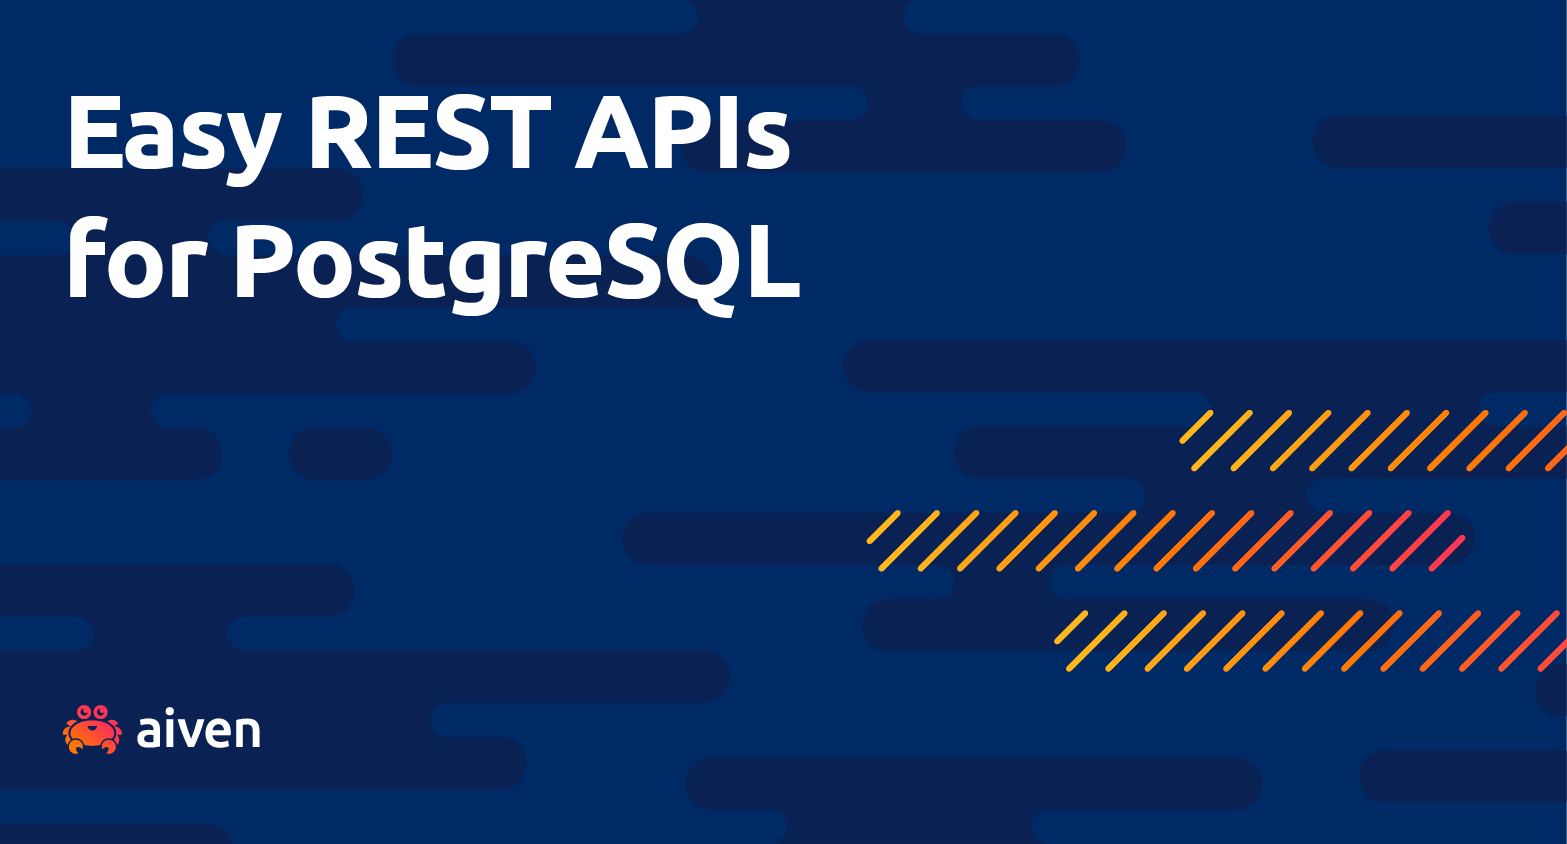 Quickly developing REST APIs with PostgREST illustration